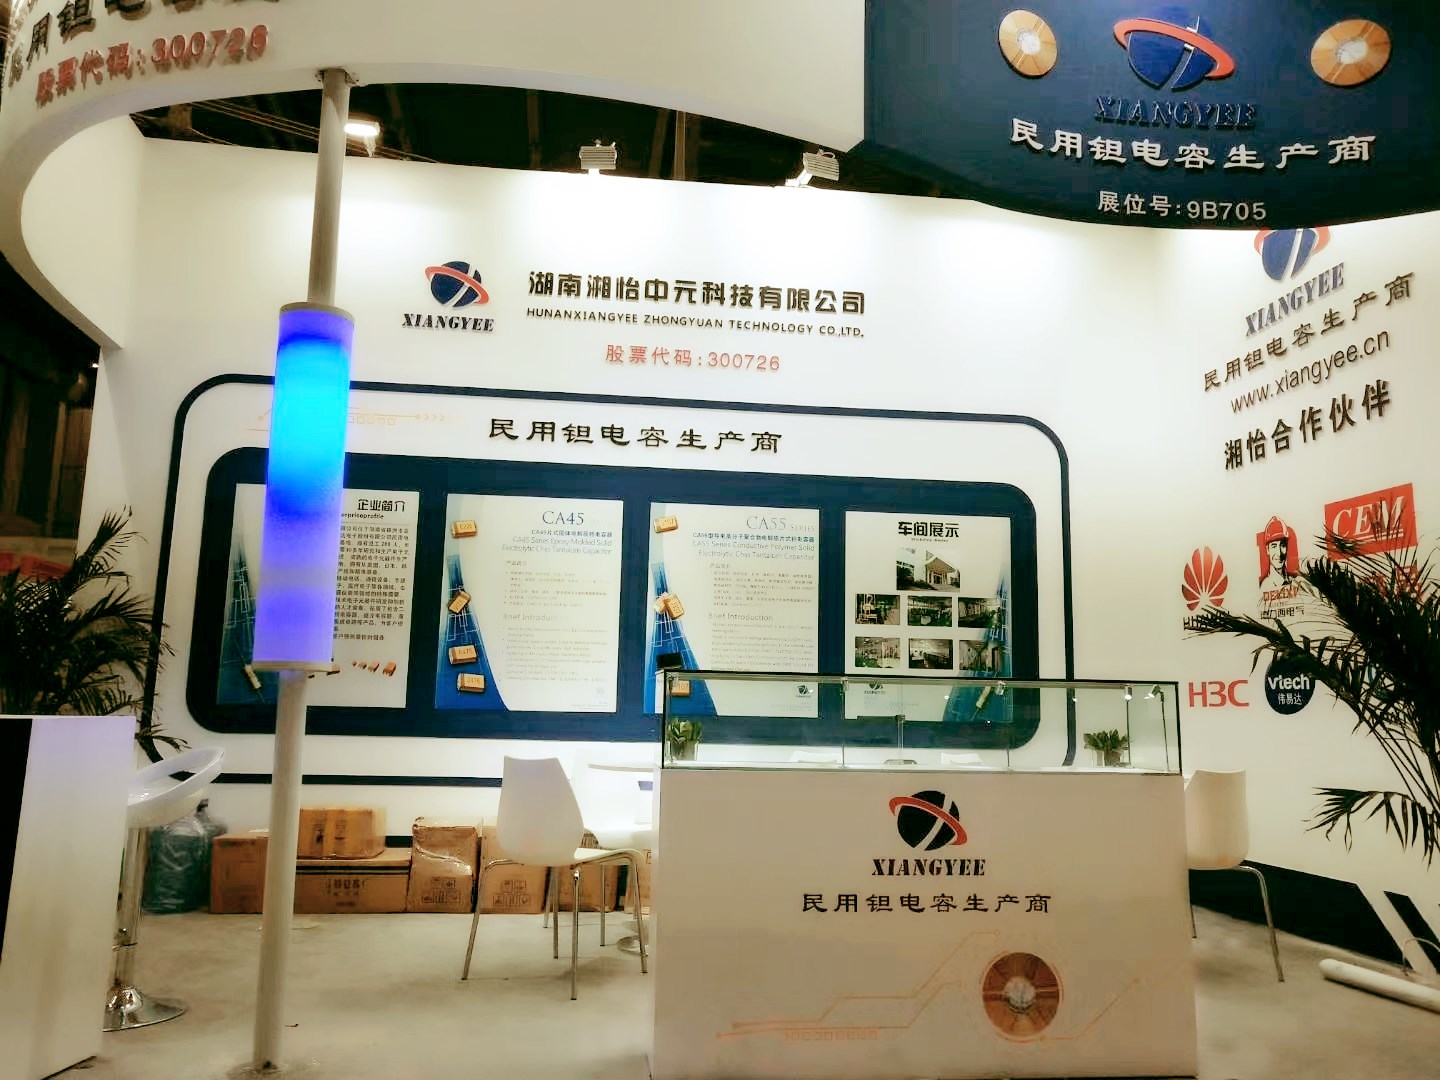 Shenzhen International Electronic Exhibition 2020